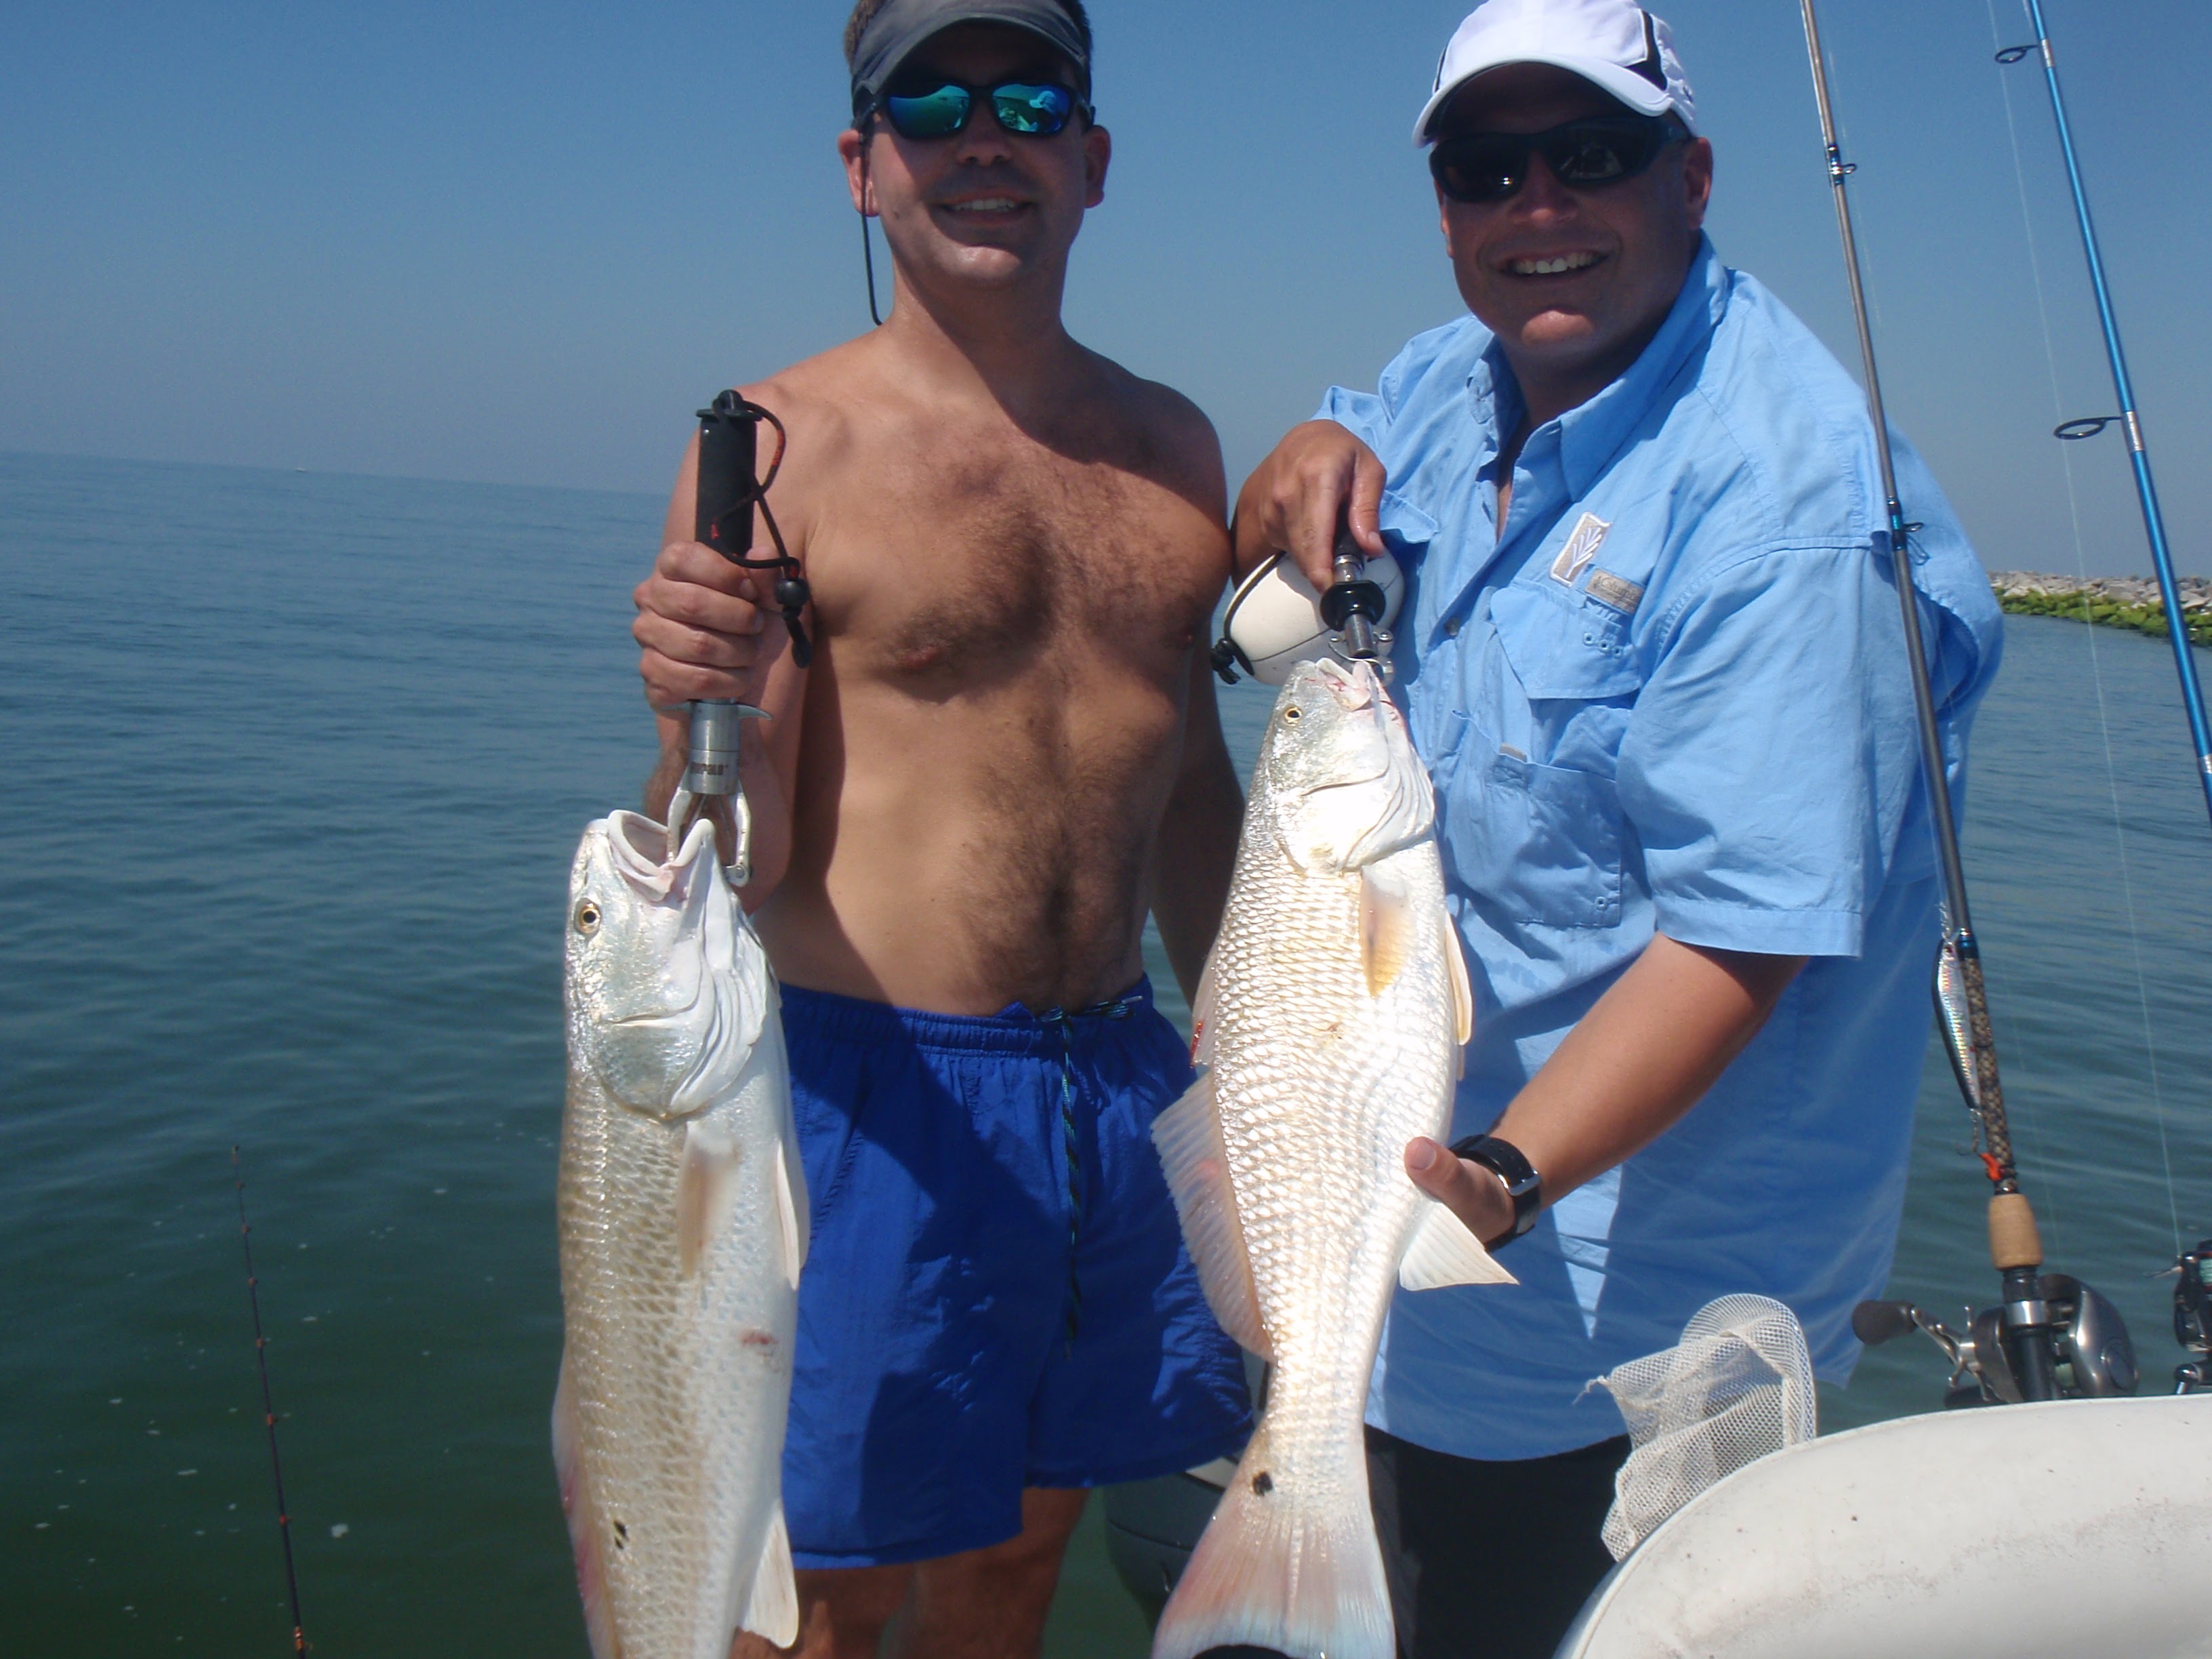 https://alabama-travel.s3.amazonaws.com/partners-uploads/photo/image/58bdc54791cadbc58b0000aa/dauphin_island_redfish_fishing_katrina_cut_fishing_for_speckled_trout_redfish.jpg